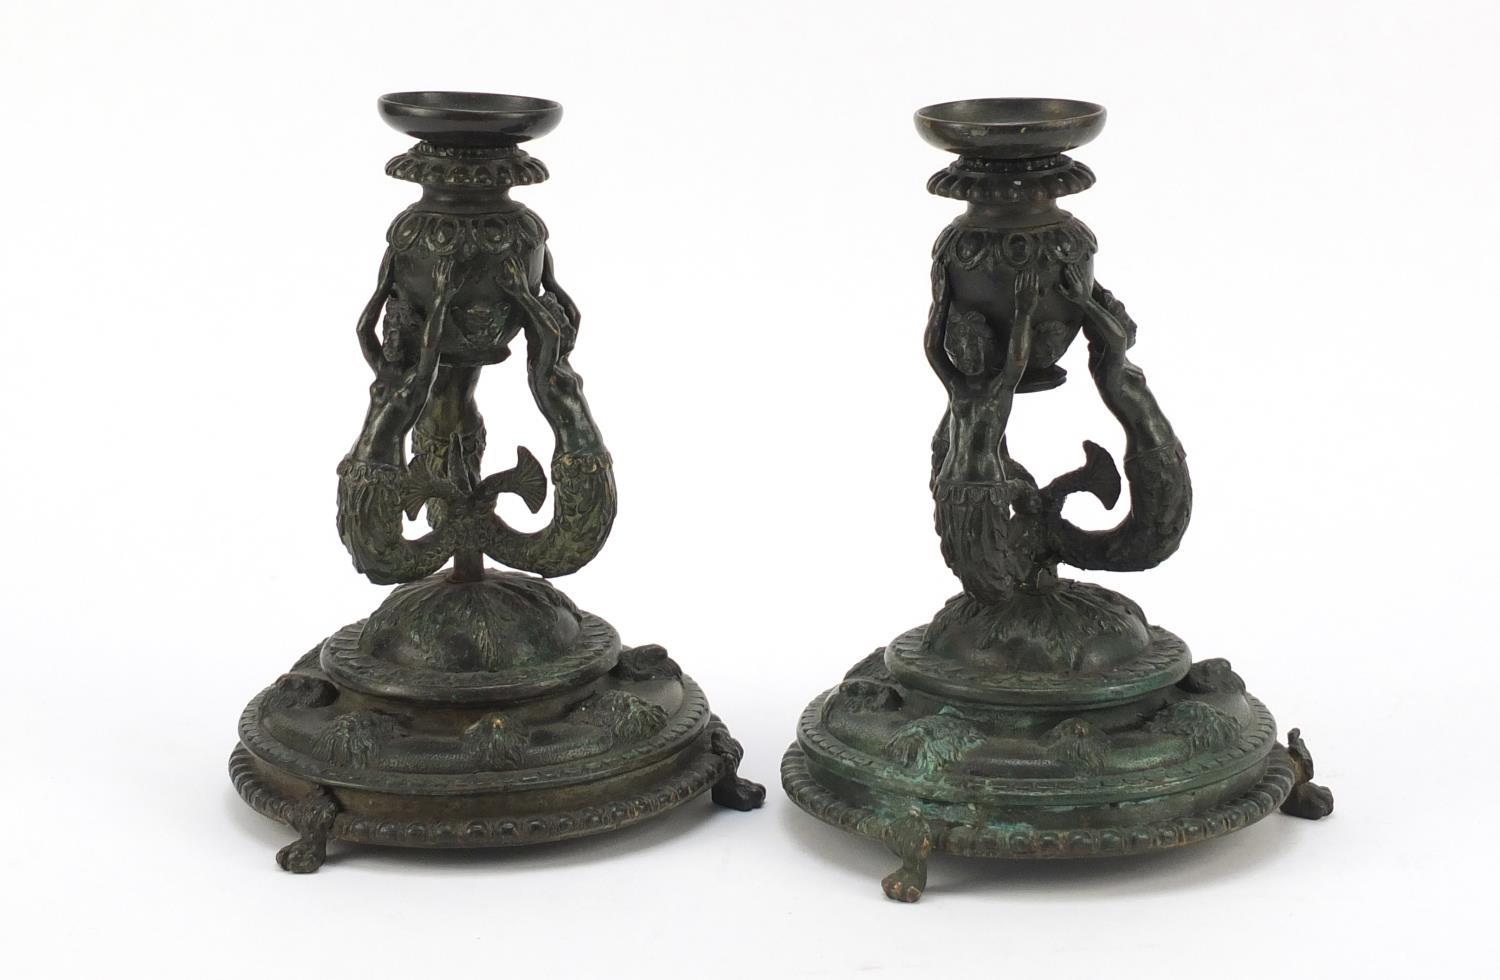 Pair of 19th century Renaissance style patinated bronze candlesticks, having detachable sconces - Image 4 of 6